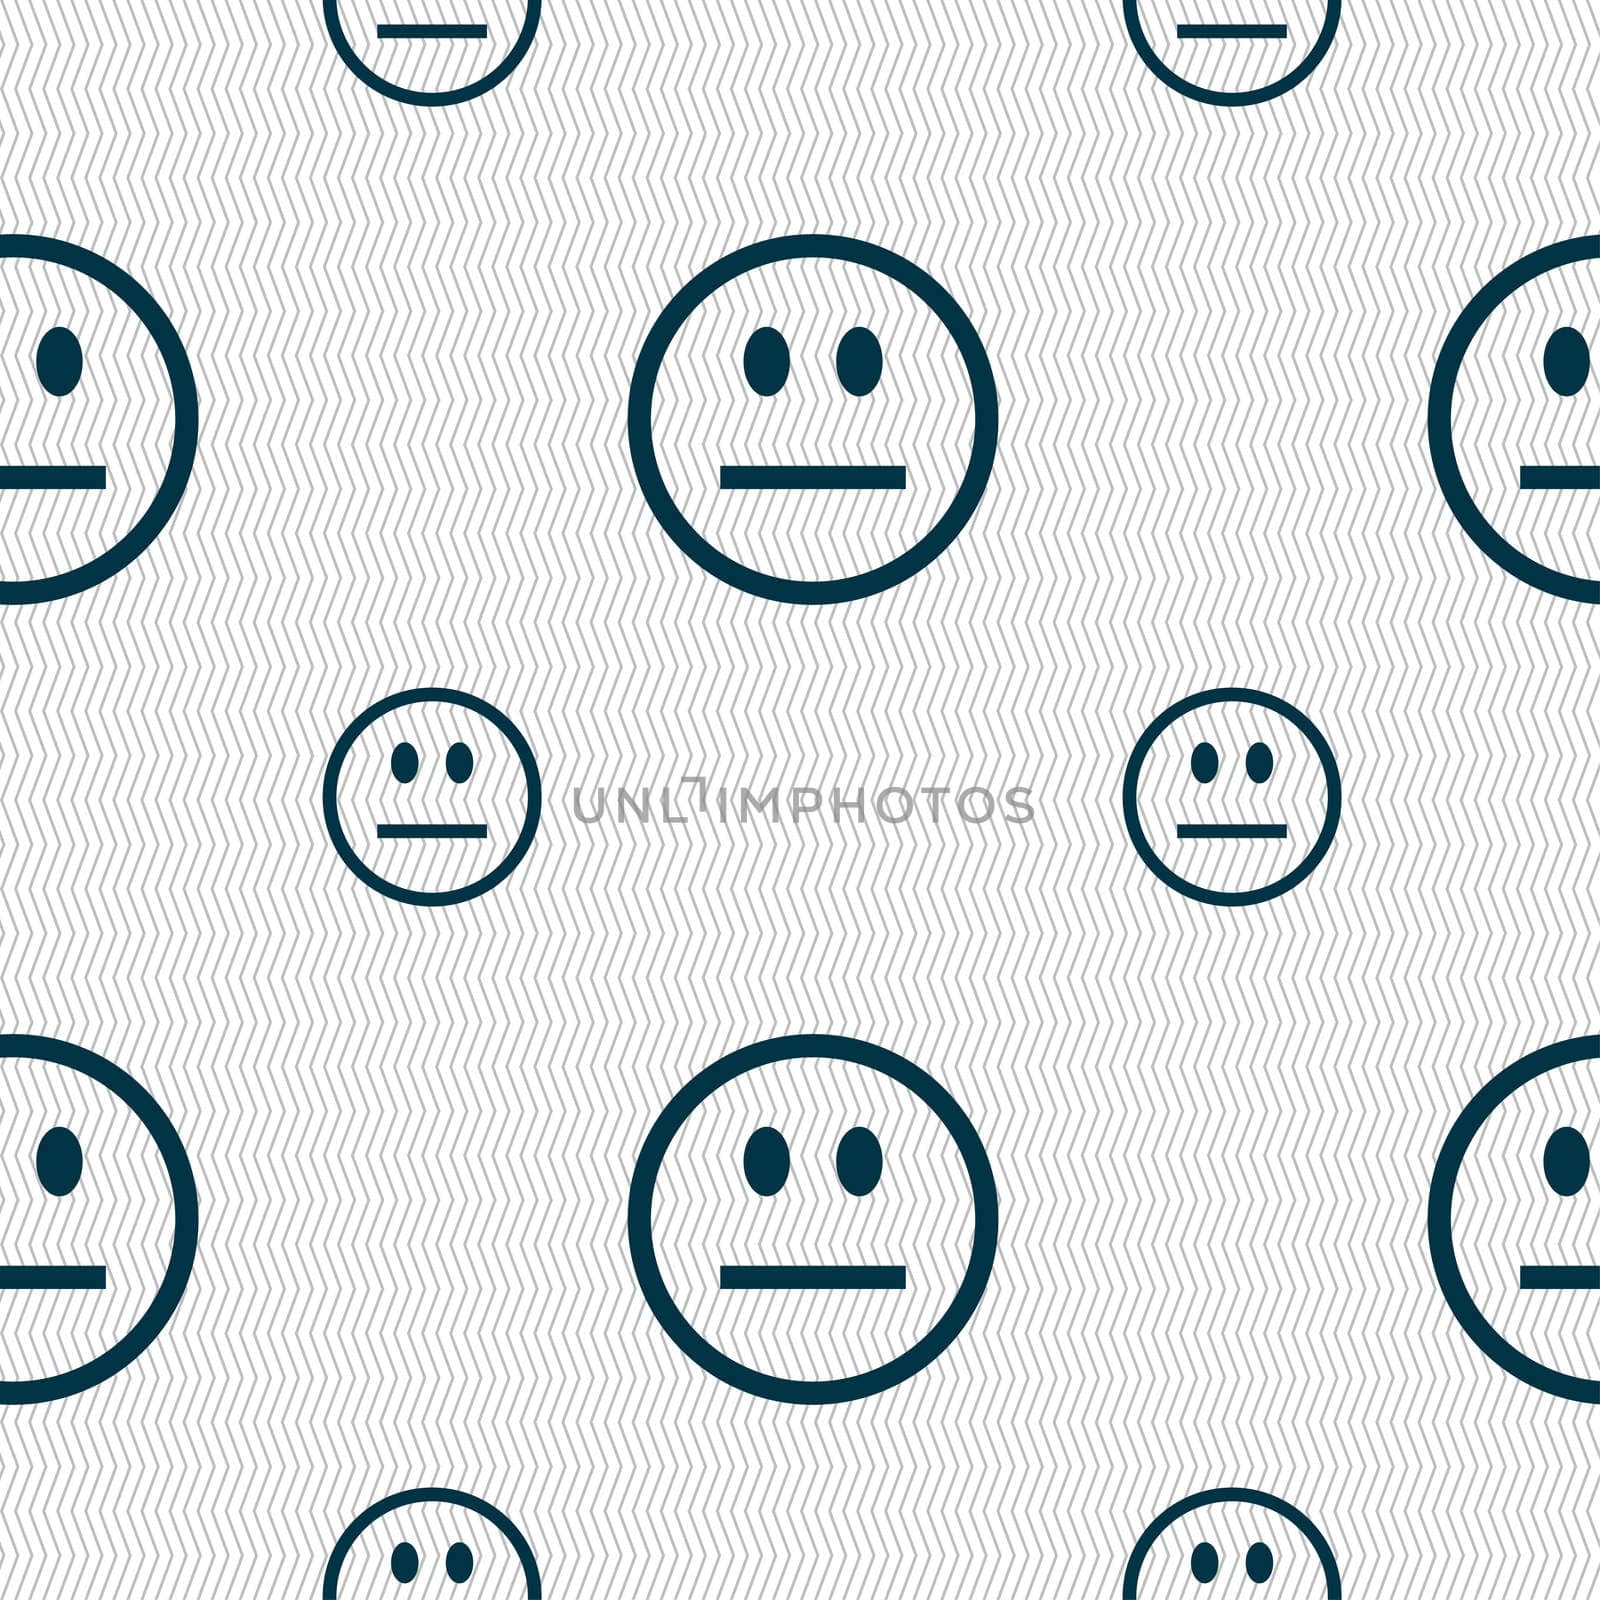 Sad face, Sadness depression icon sign. Seamless pattern with geometric texture. illustration